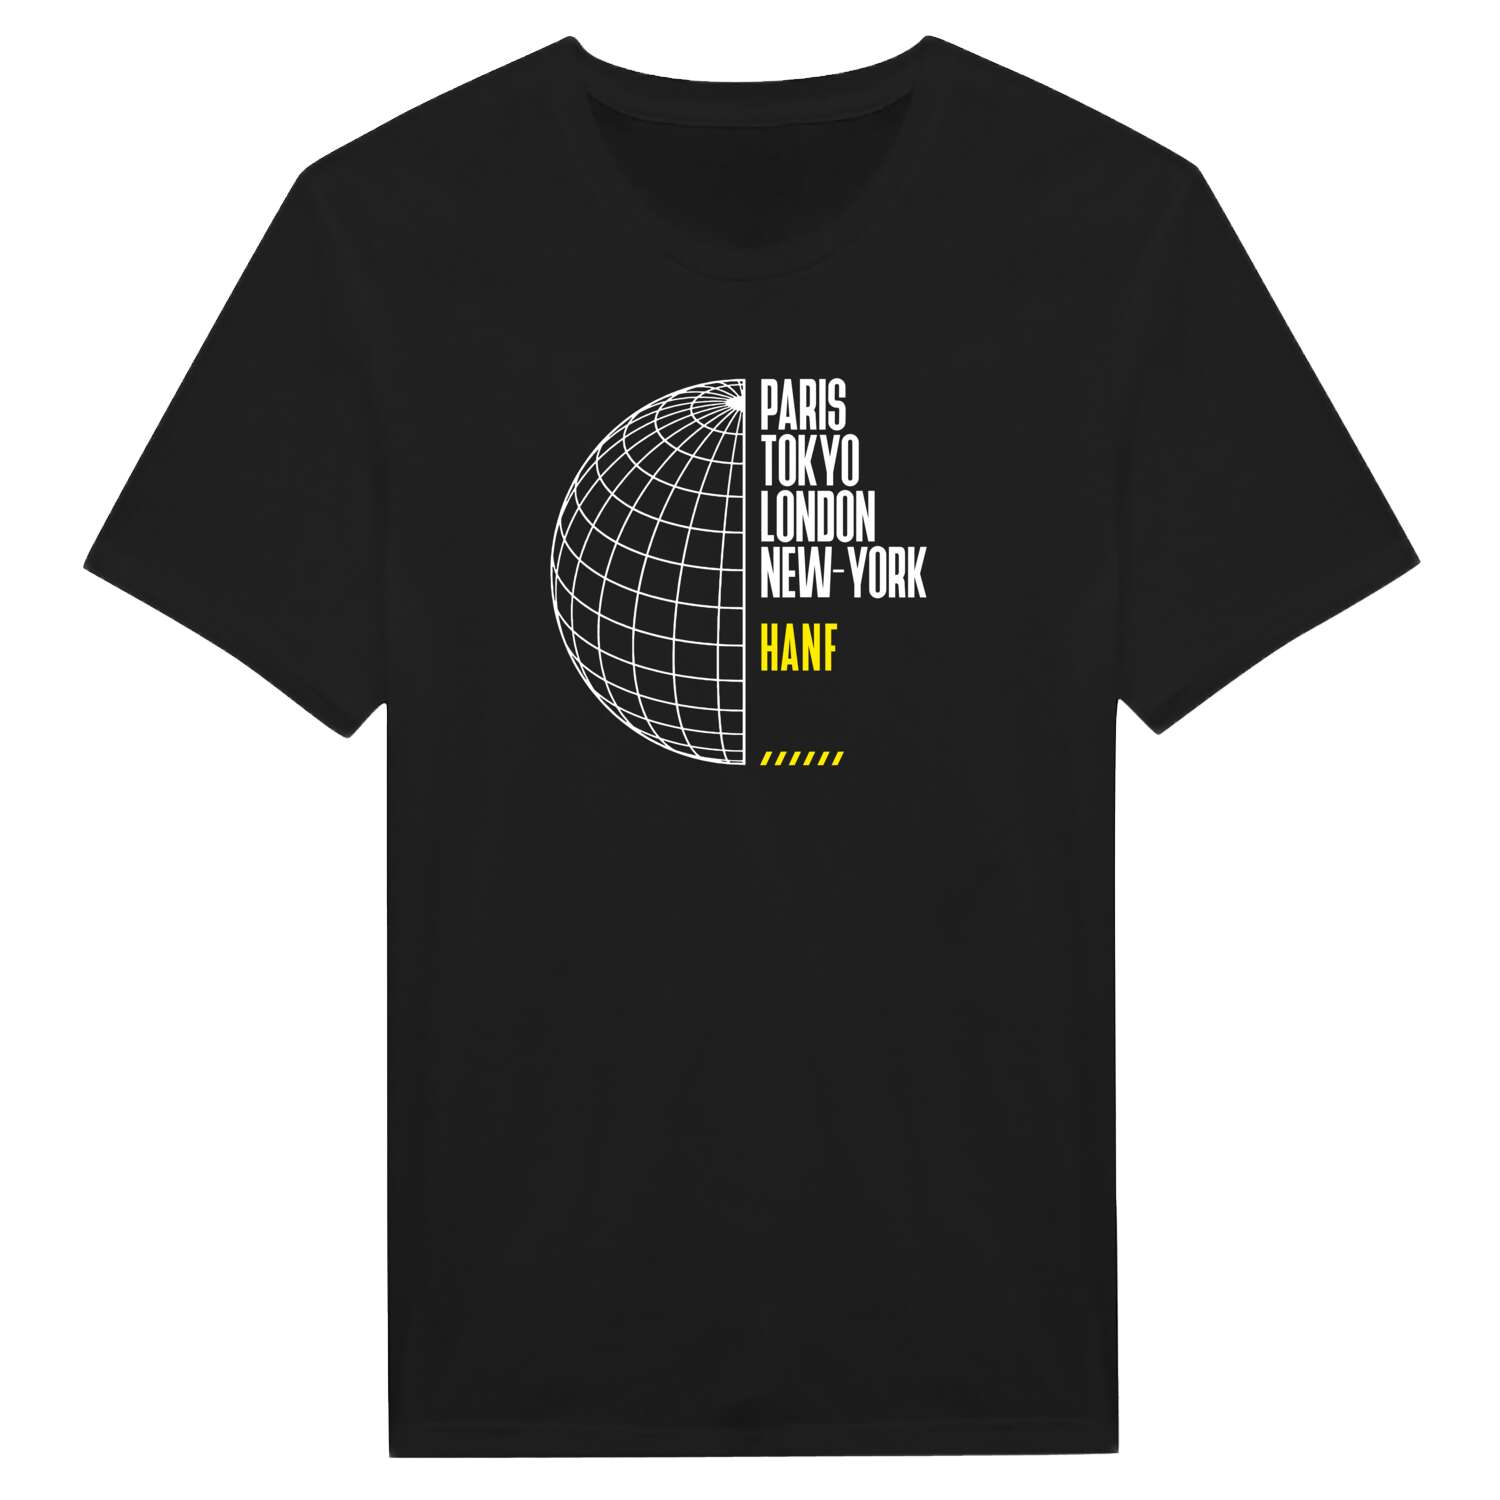 Hanf T-Shirt »Paris Tokyo London«